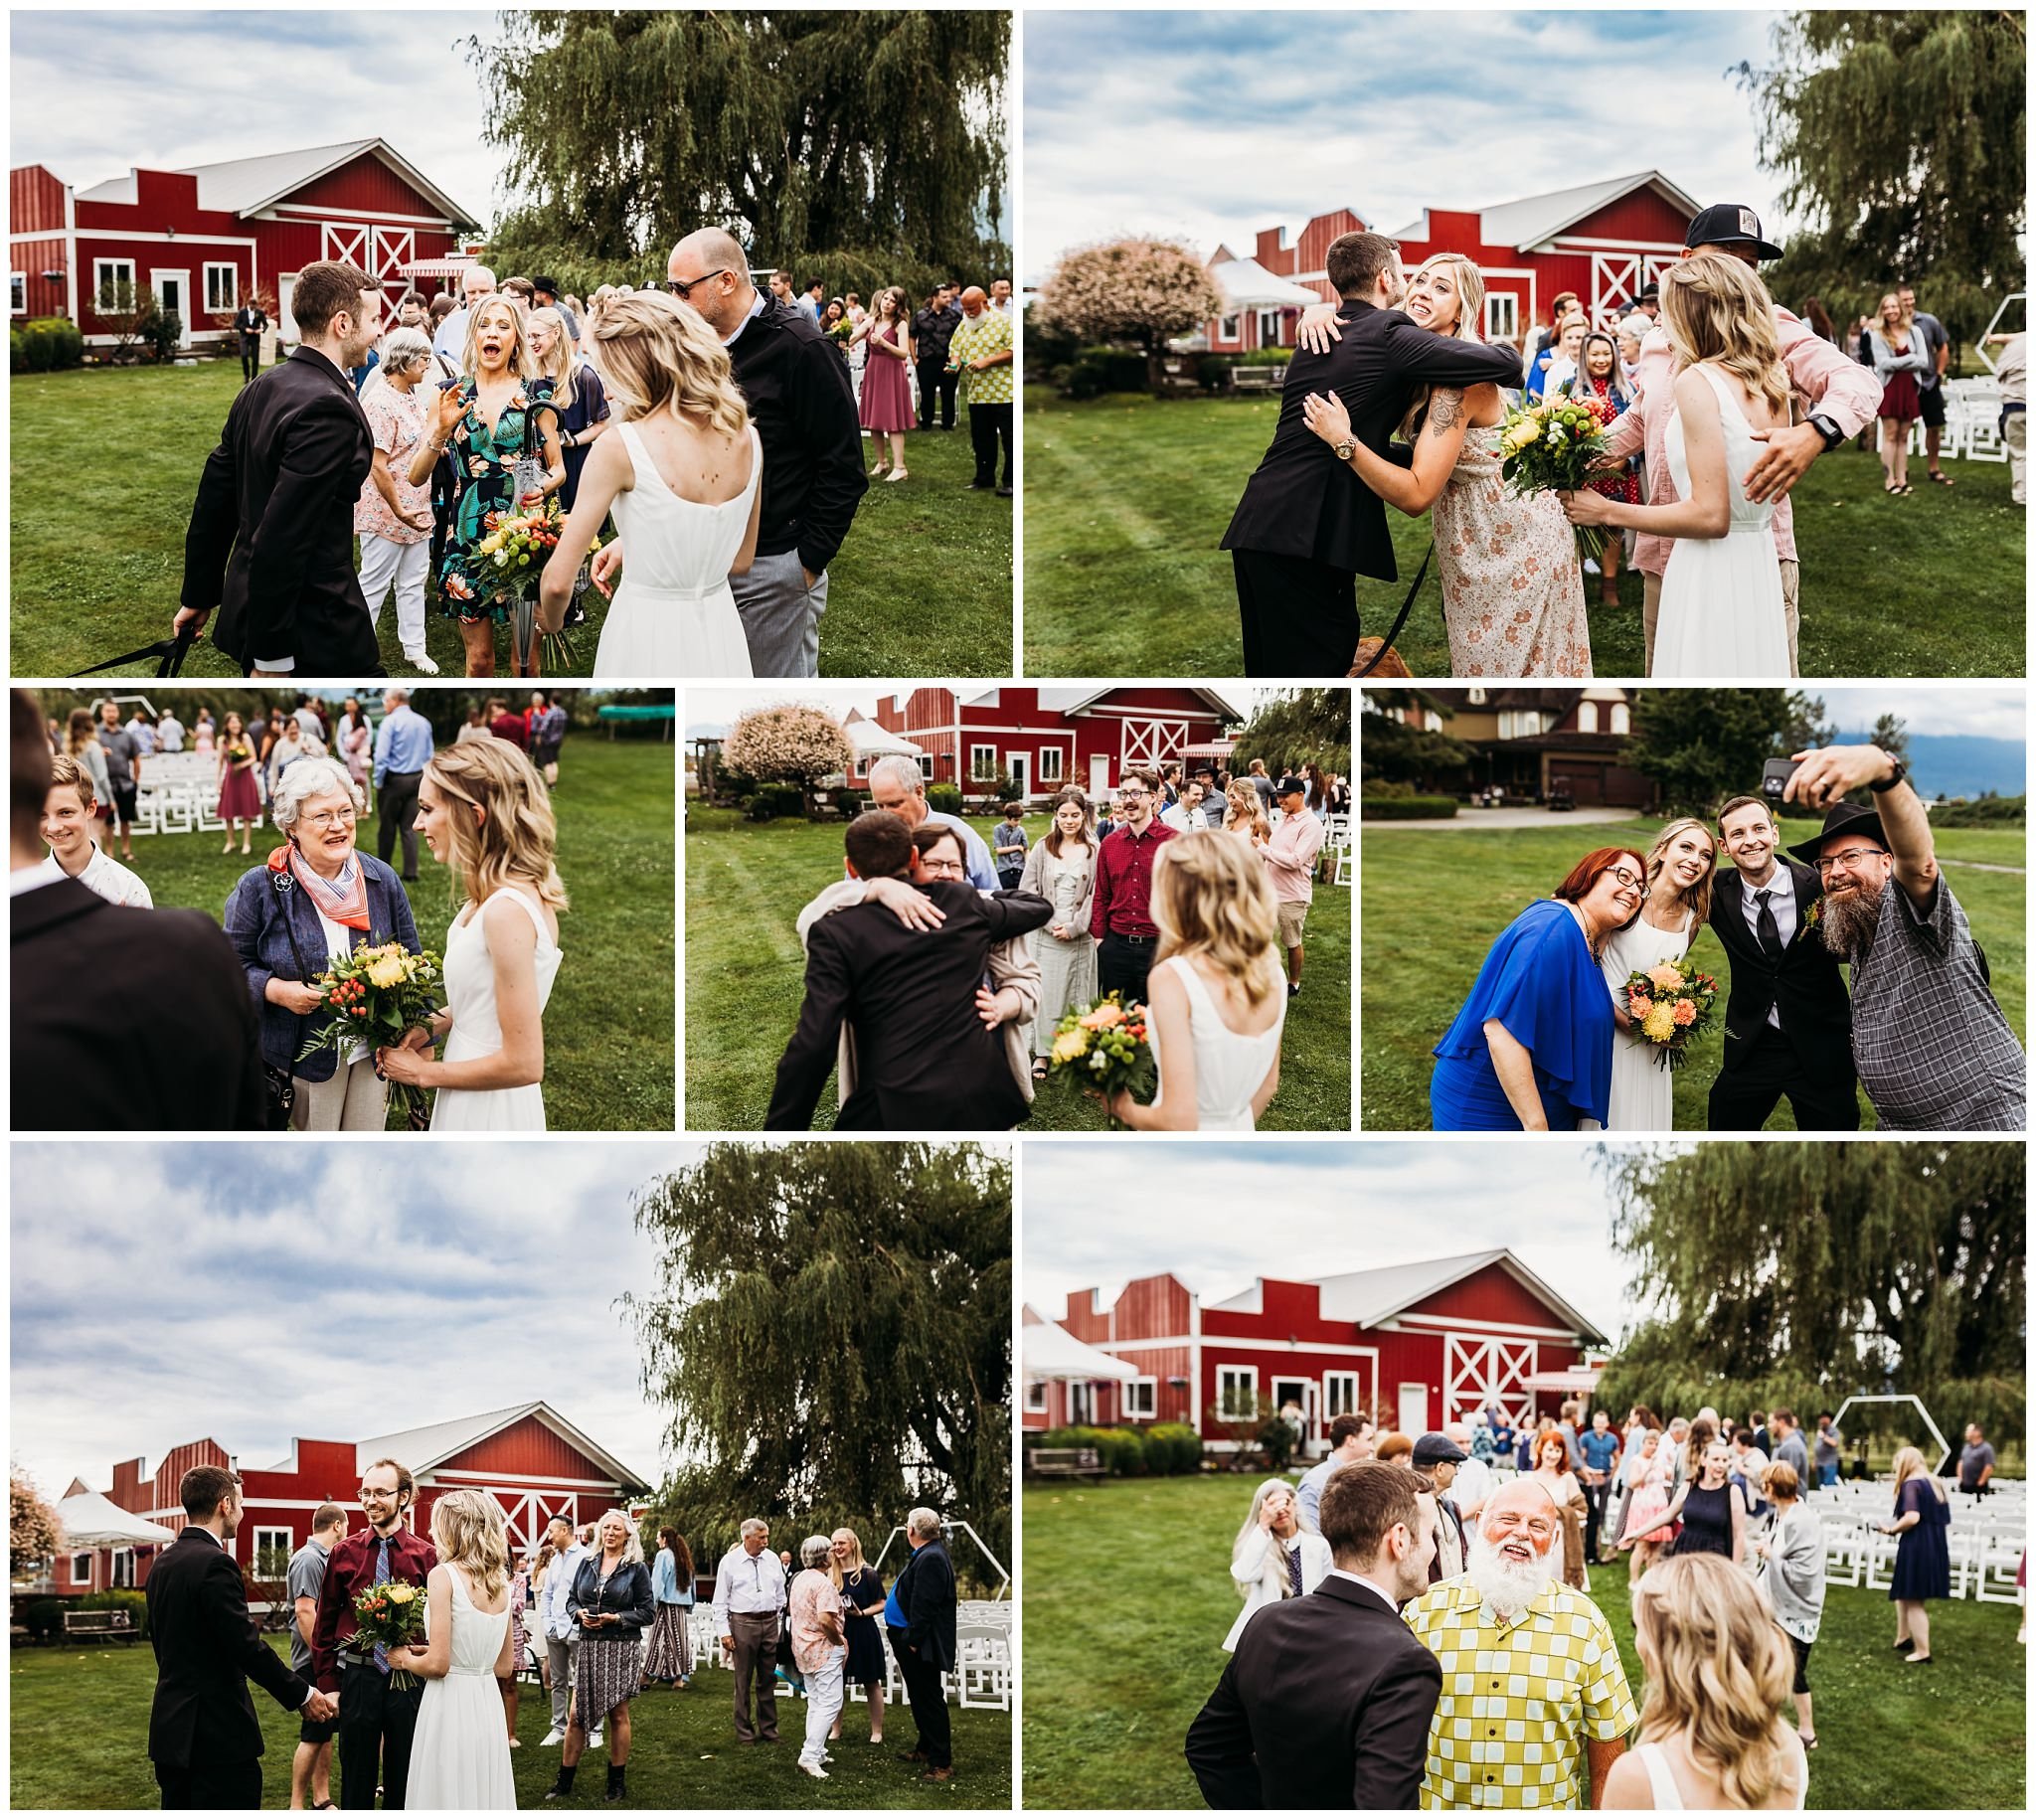 Shelby's+Pond+Wedding+Venue+Photographer